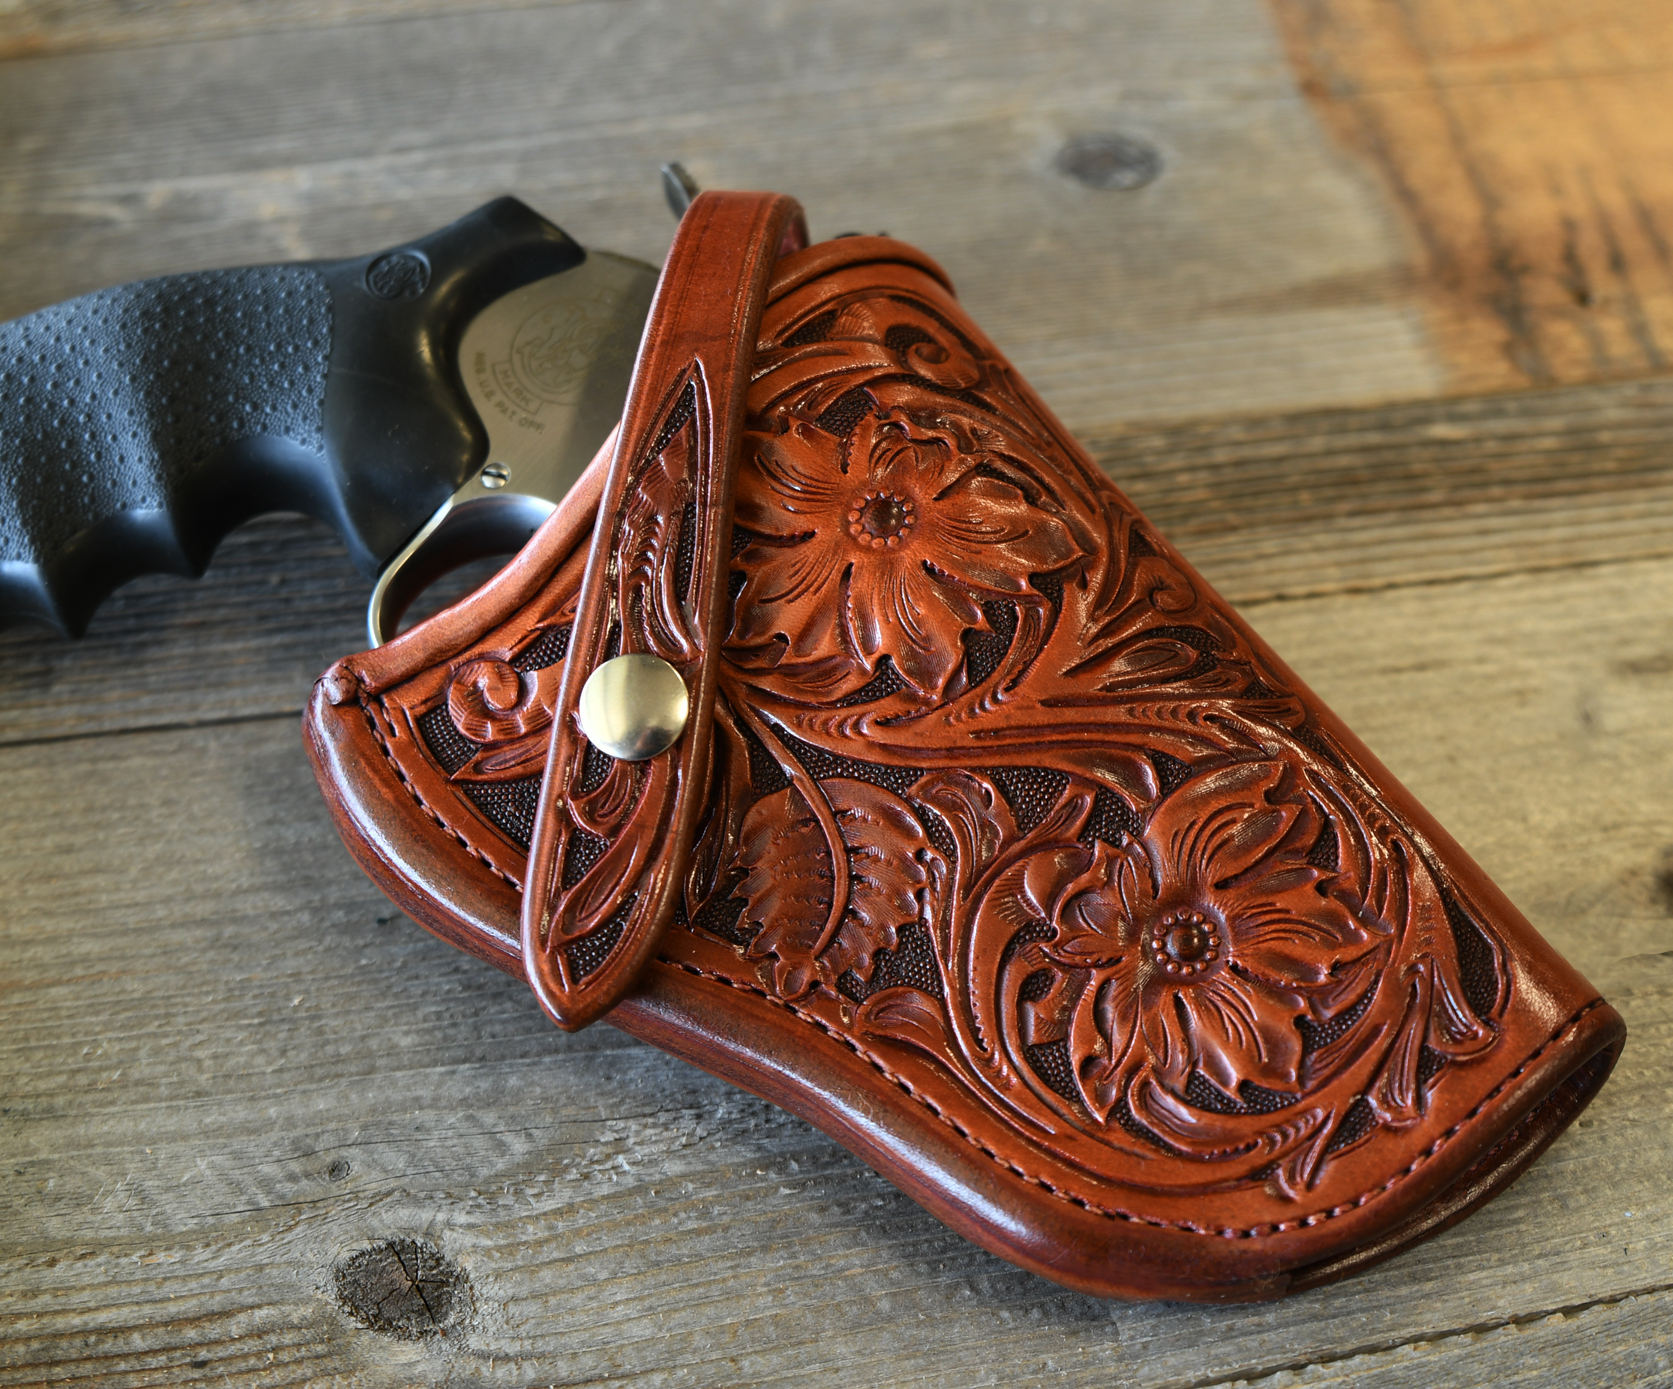 custom leather gun holsters